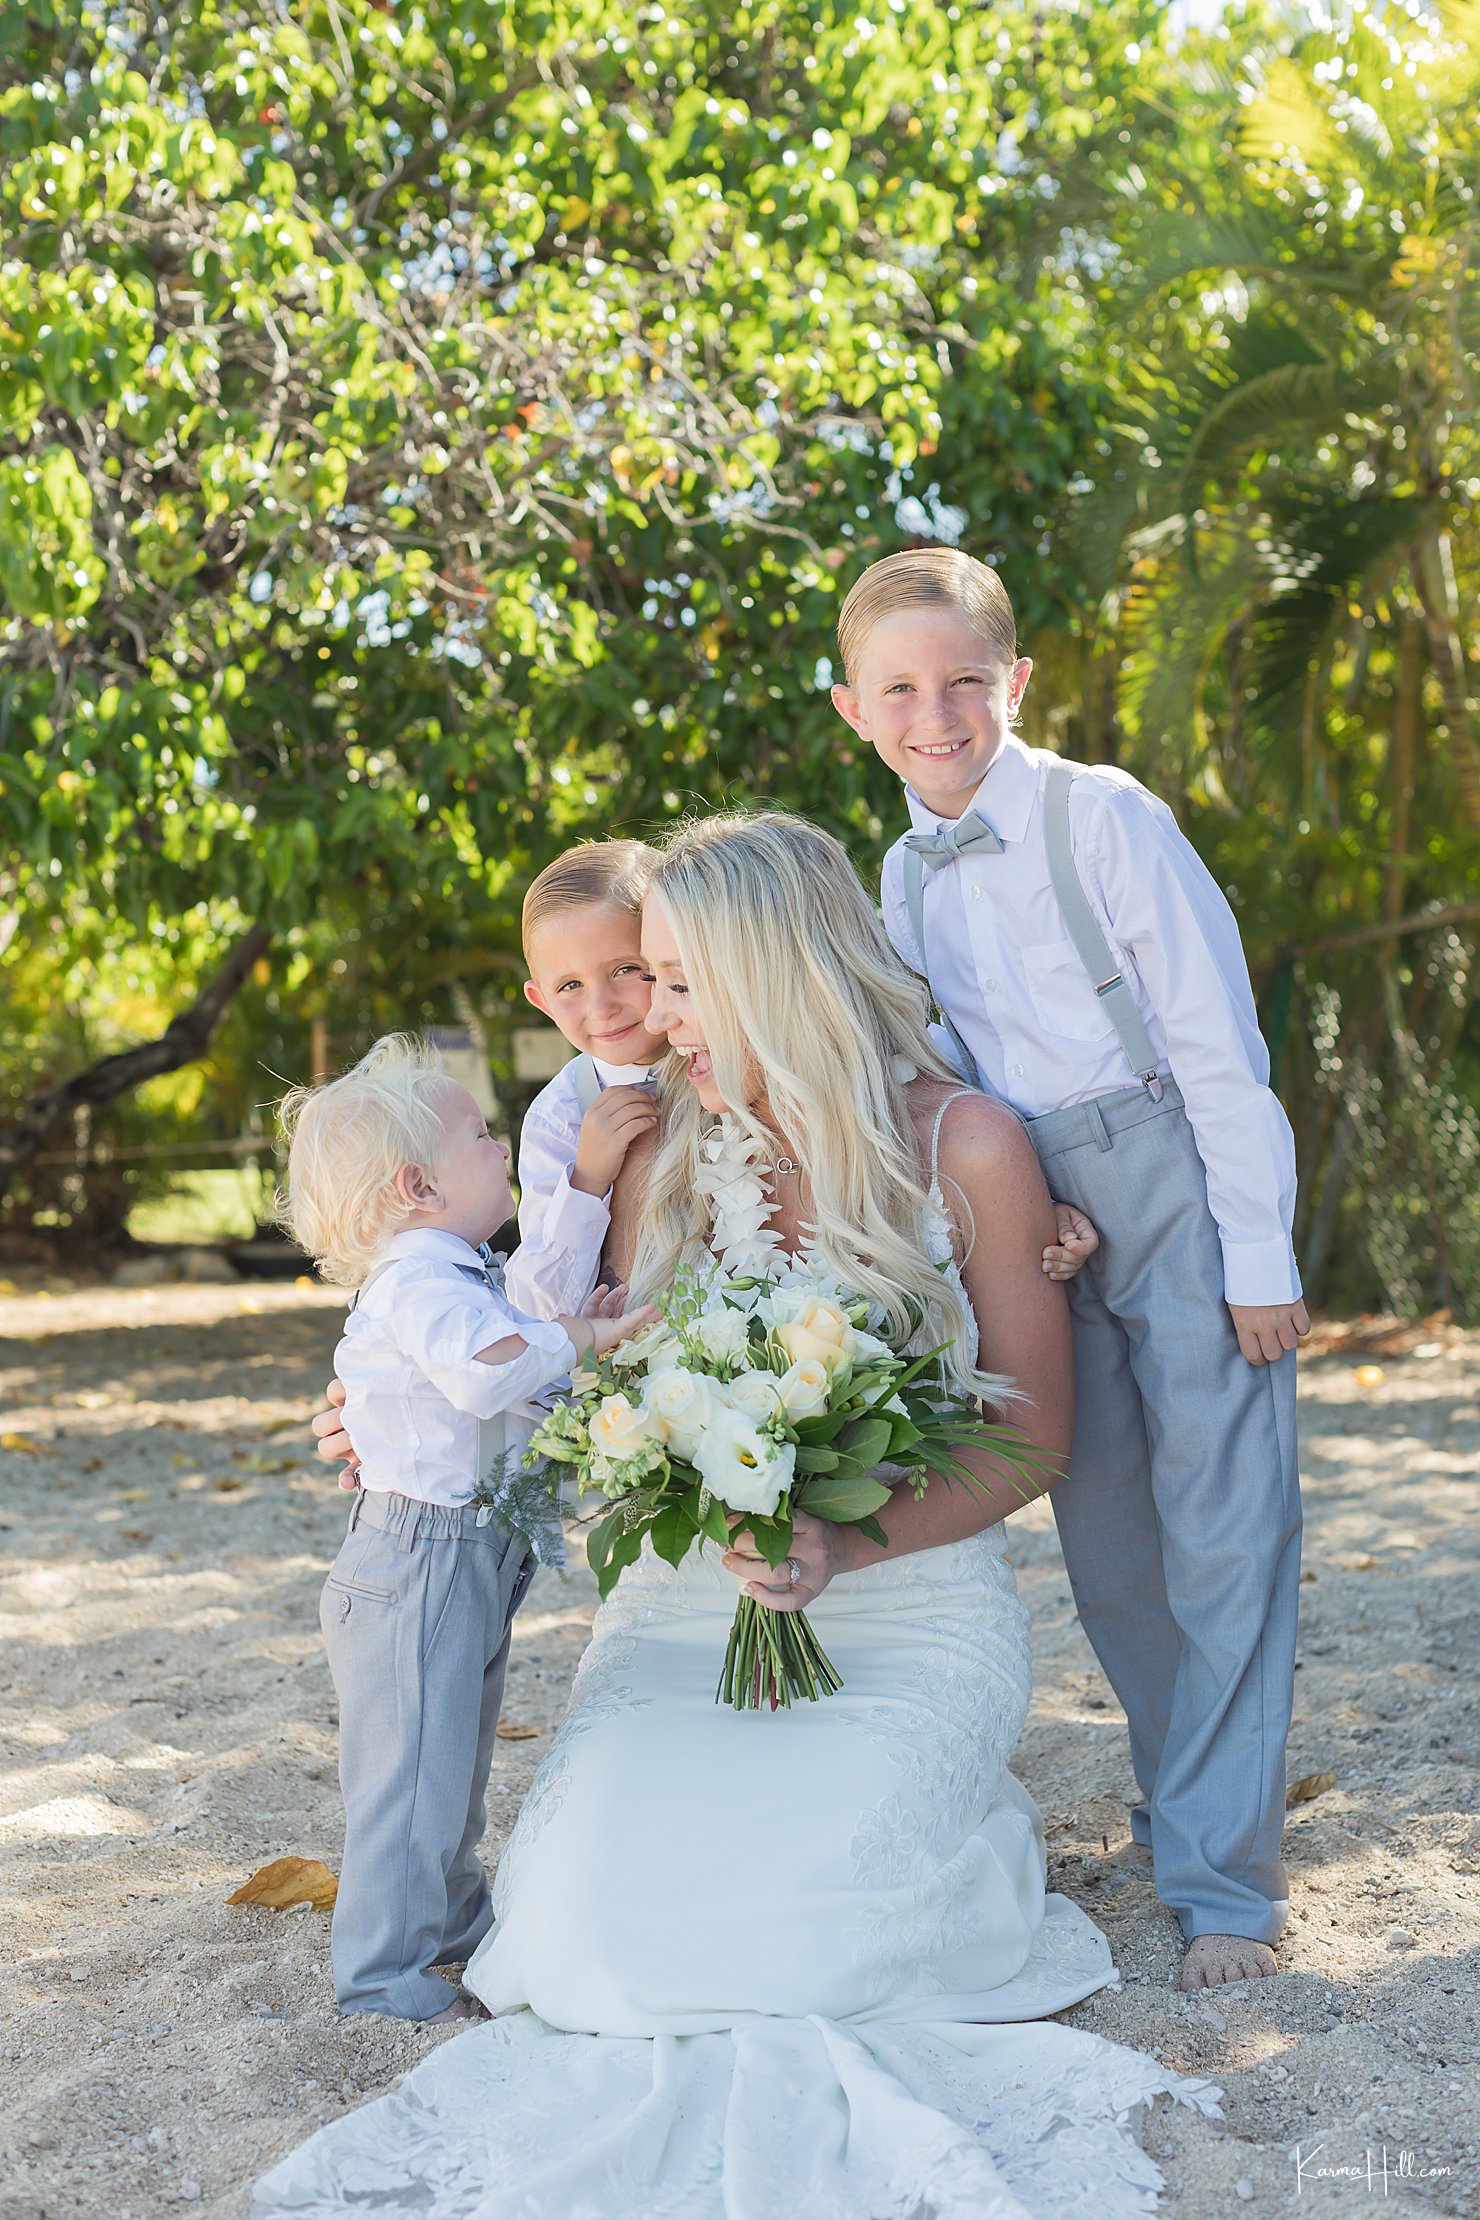 Oahu wedding with kids